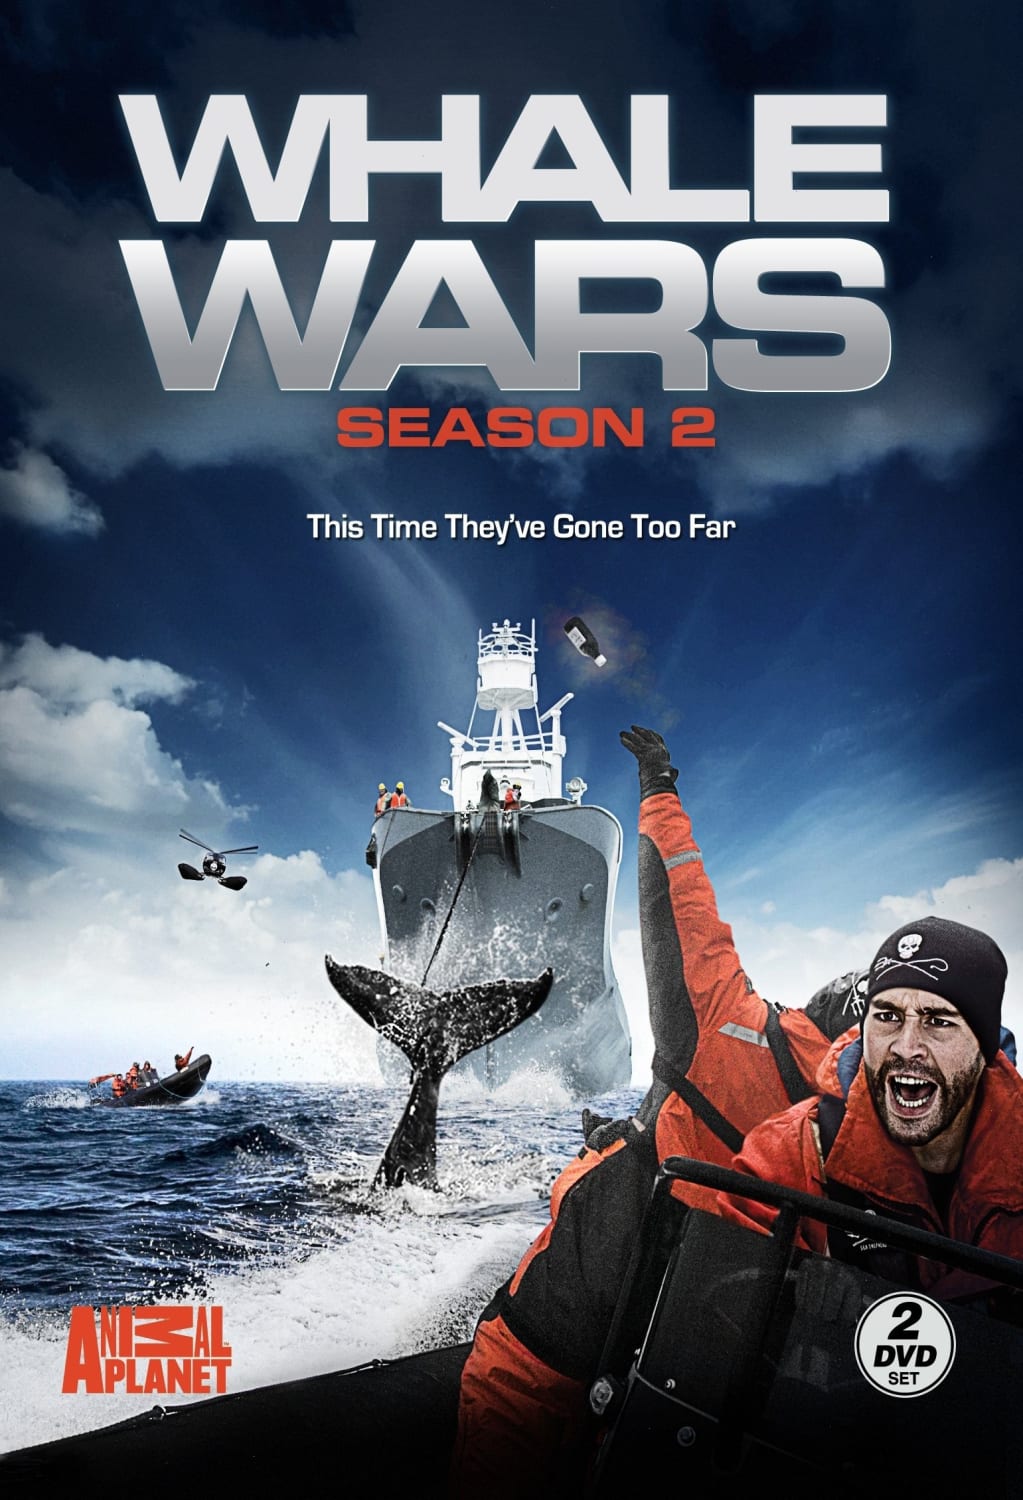 Whale Wars S2 (DVD) on MovieShack